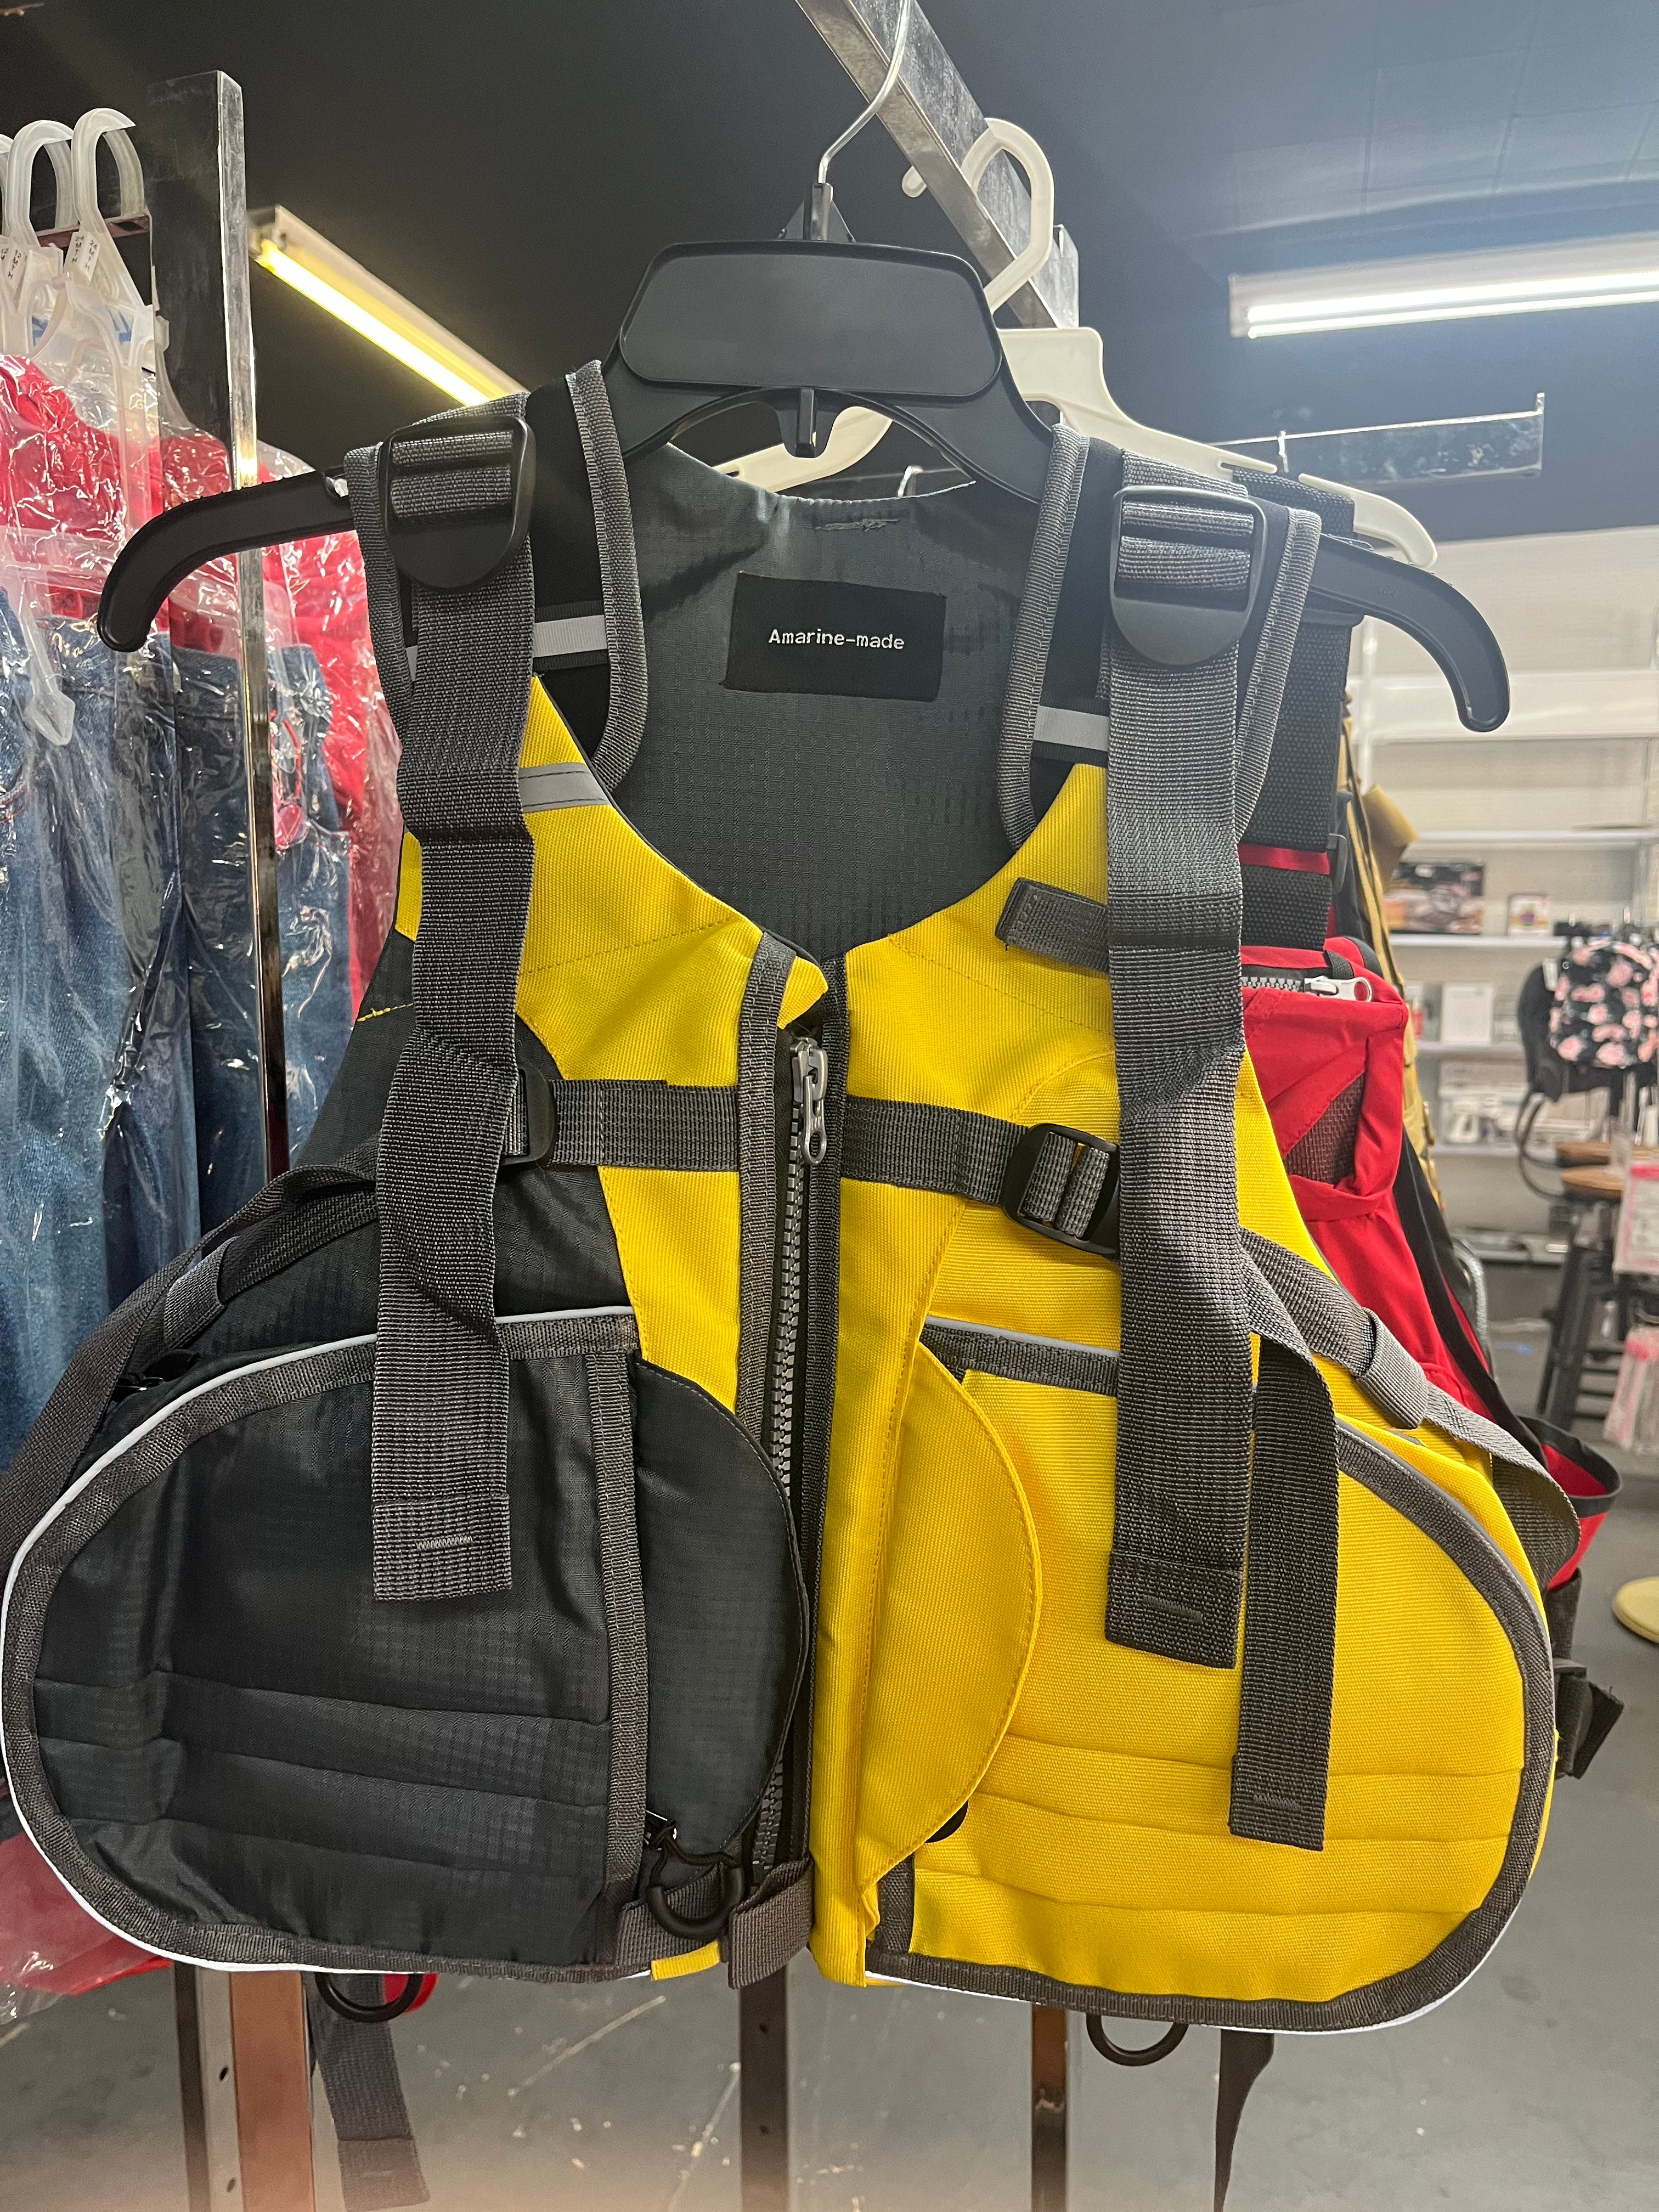 Amarine-made Fishing Boat Life Vest Camo Adjustable Straps Pockets Zip –  Mega Brown Box